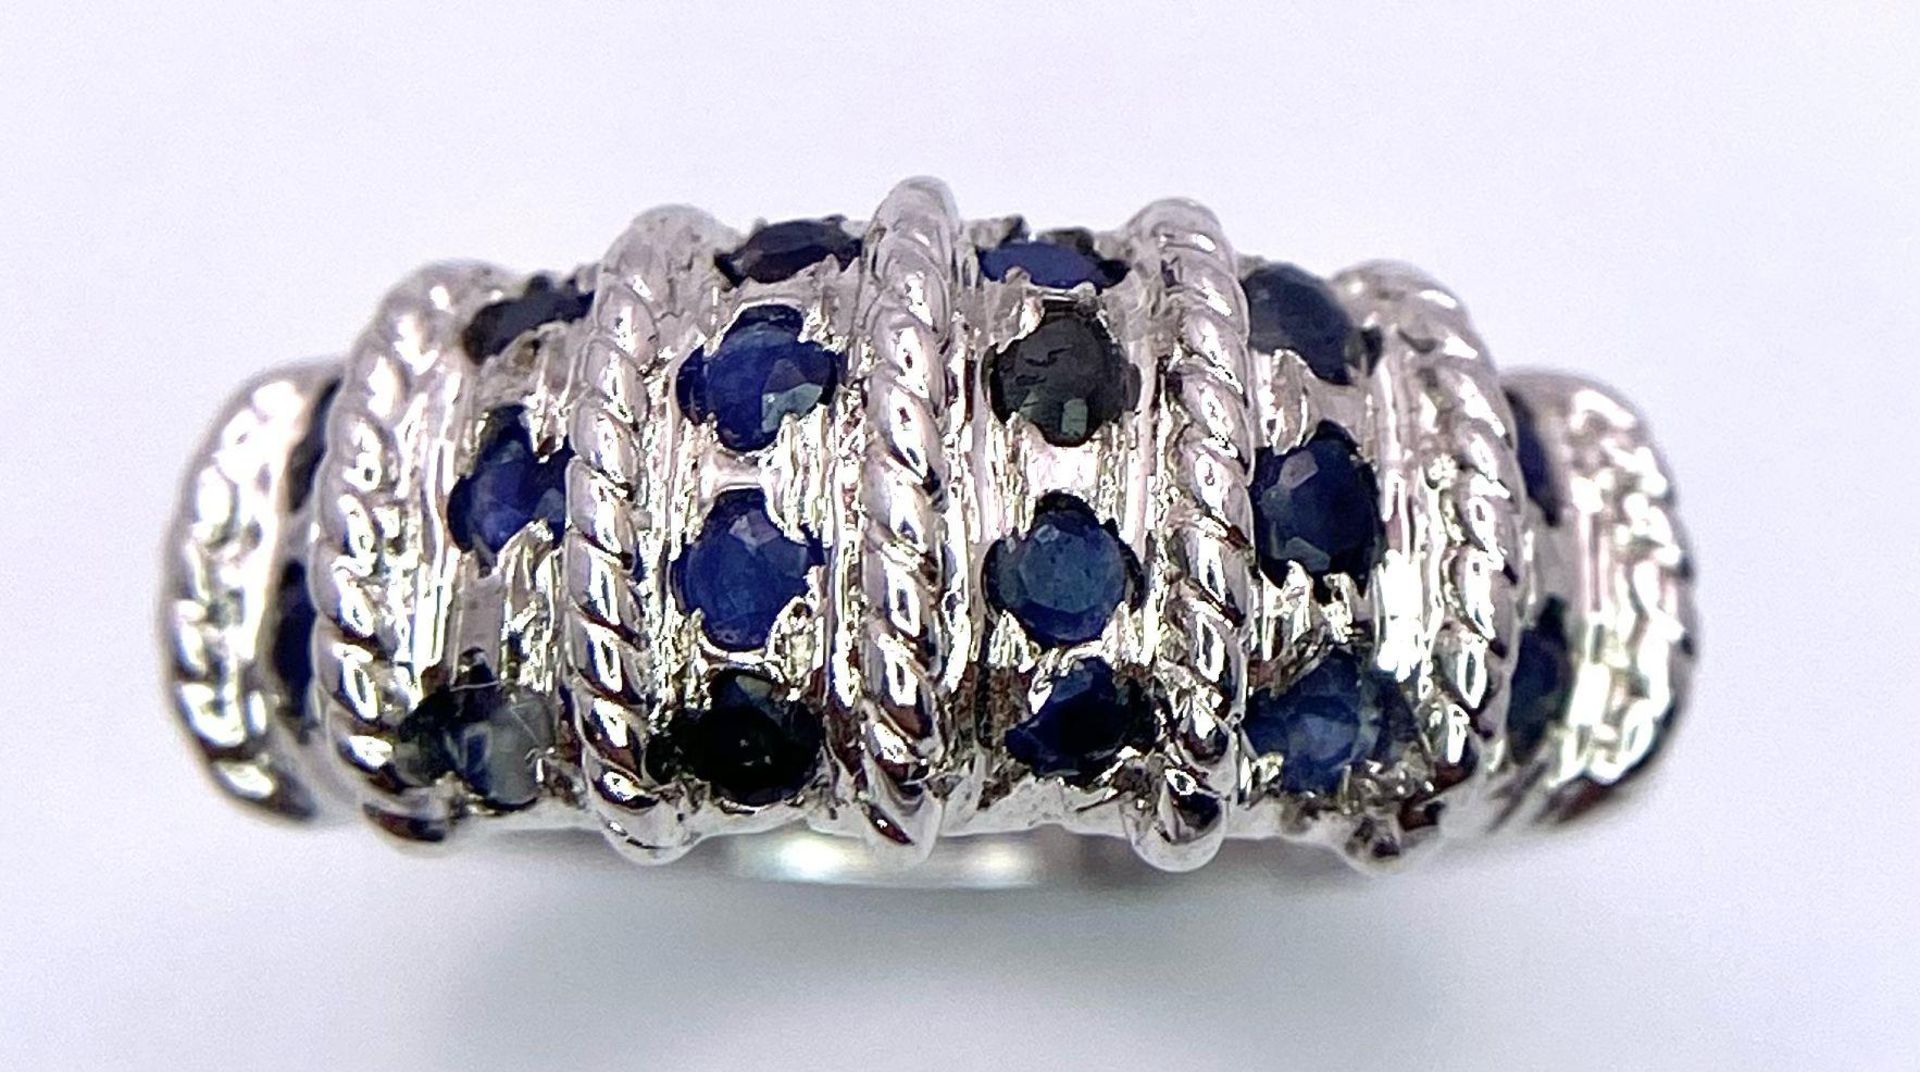 A Graduating Vertical Band Sapphire 925 Silver Ring. Sapphires - 2ctw. 4.77g total weight. Size M. - Bild 2 aus 5